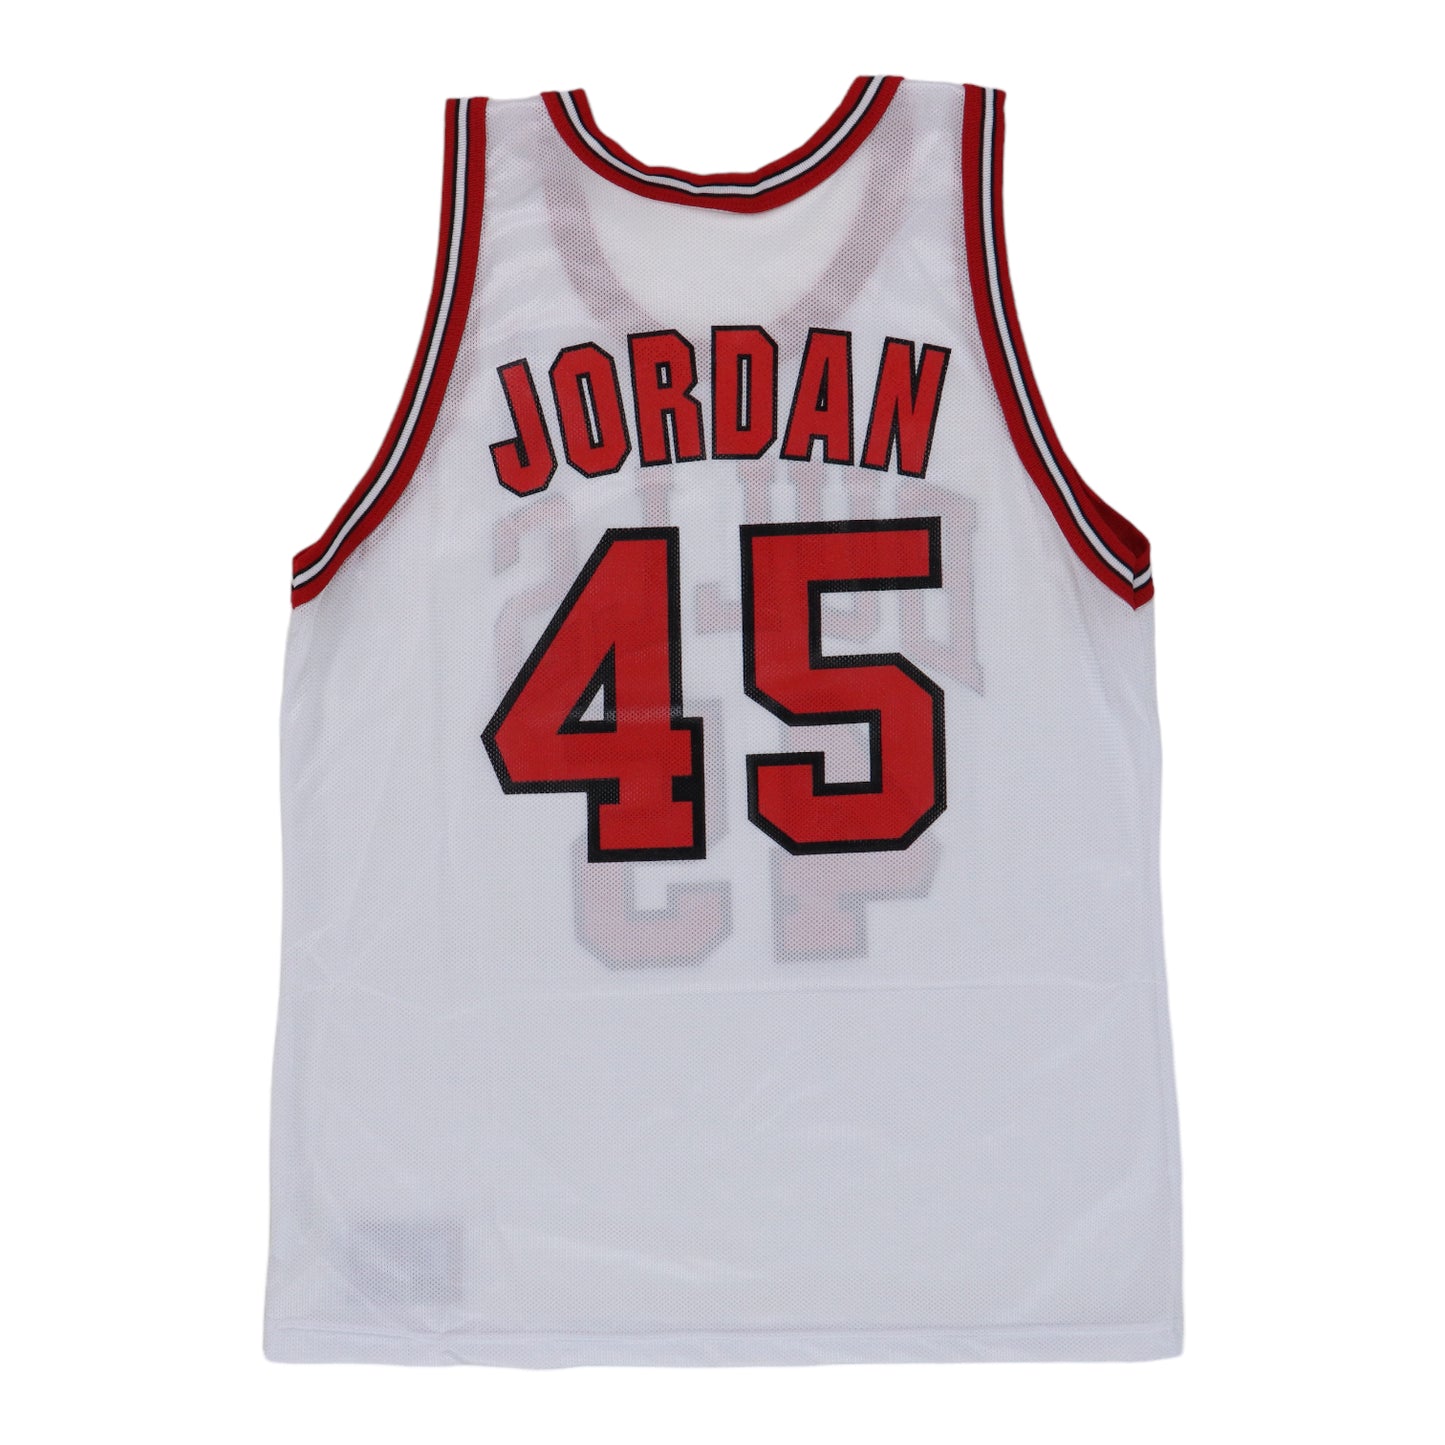 90s michael jordan jersey